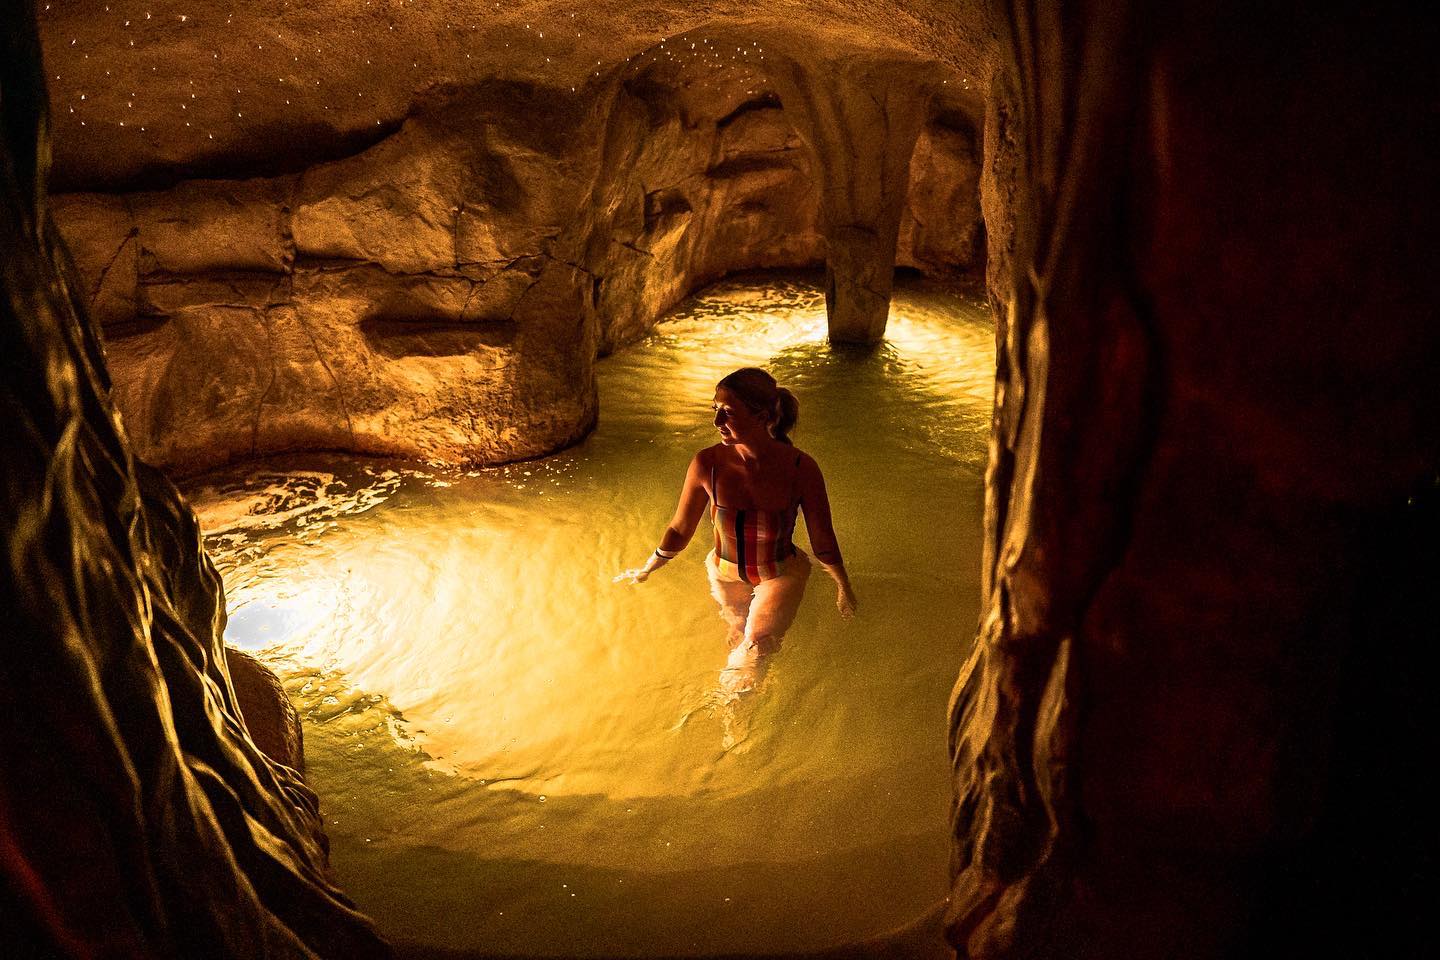 Deep Blue Hot Springs in Warrnambool is offering an after dark